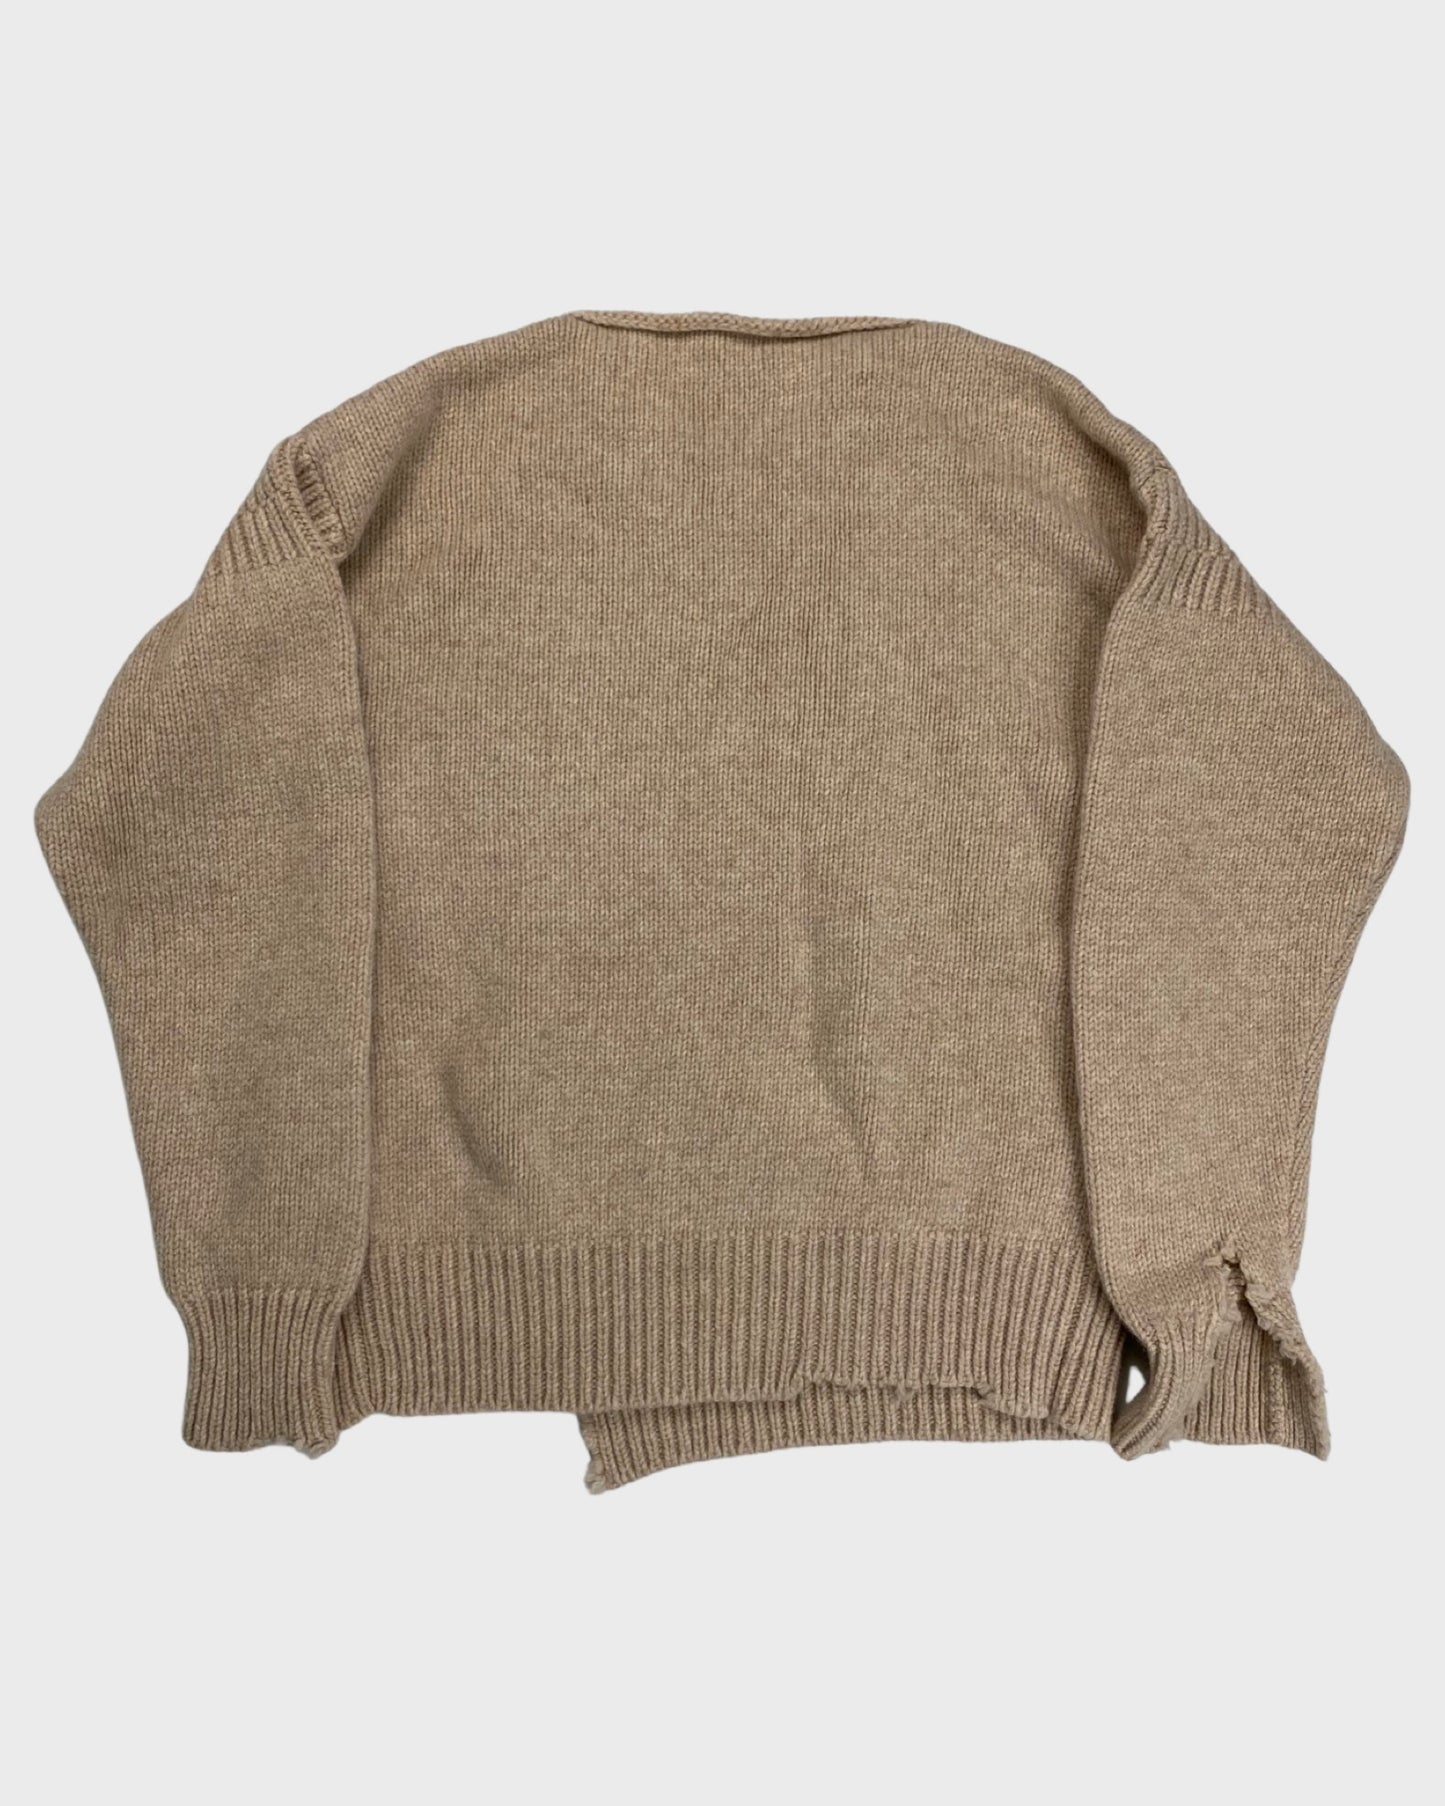 Marni distressed deconstructed sweater in beige / tan SZ:46